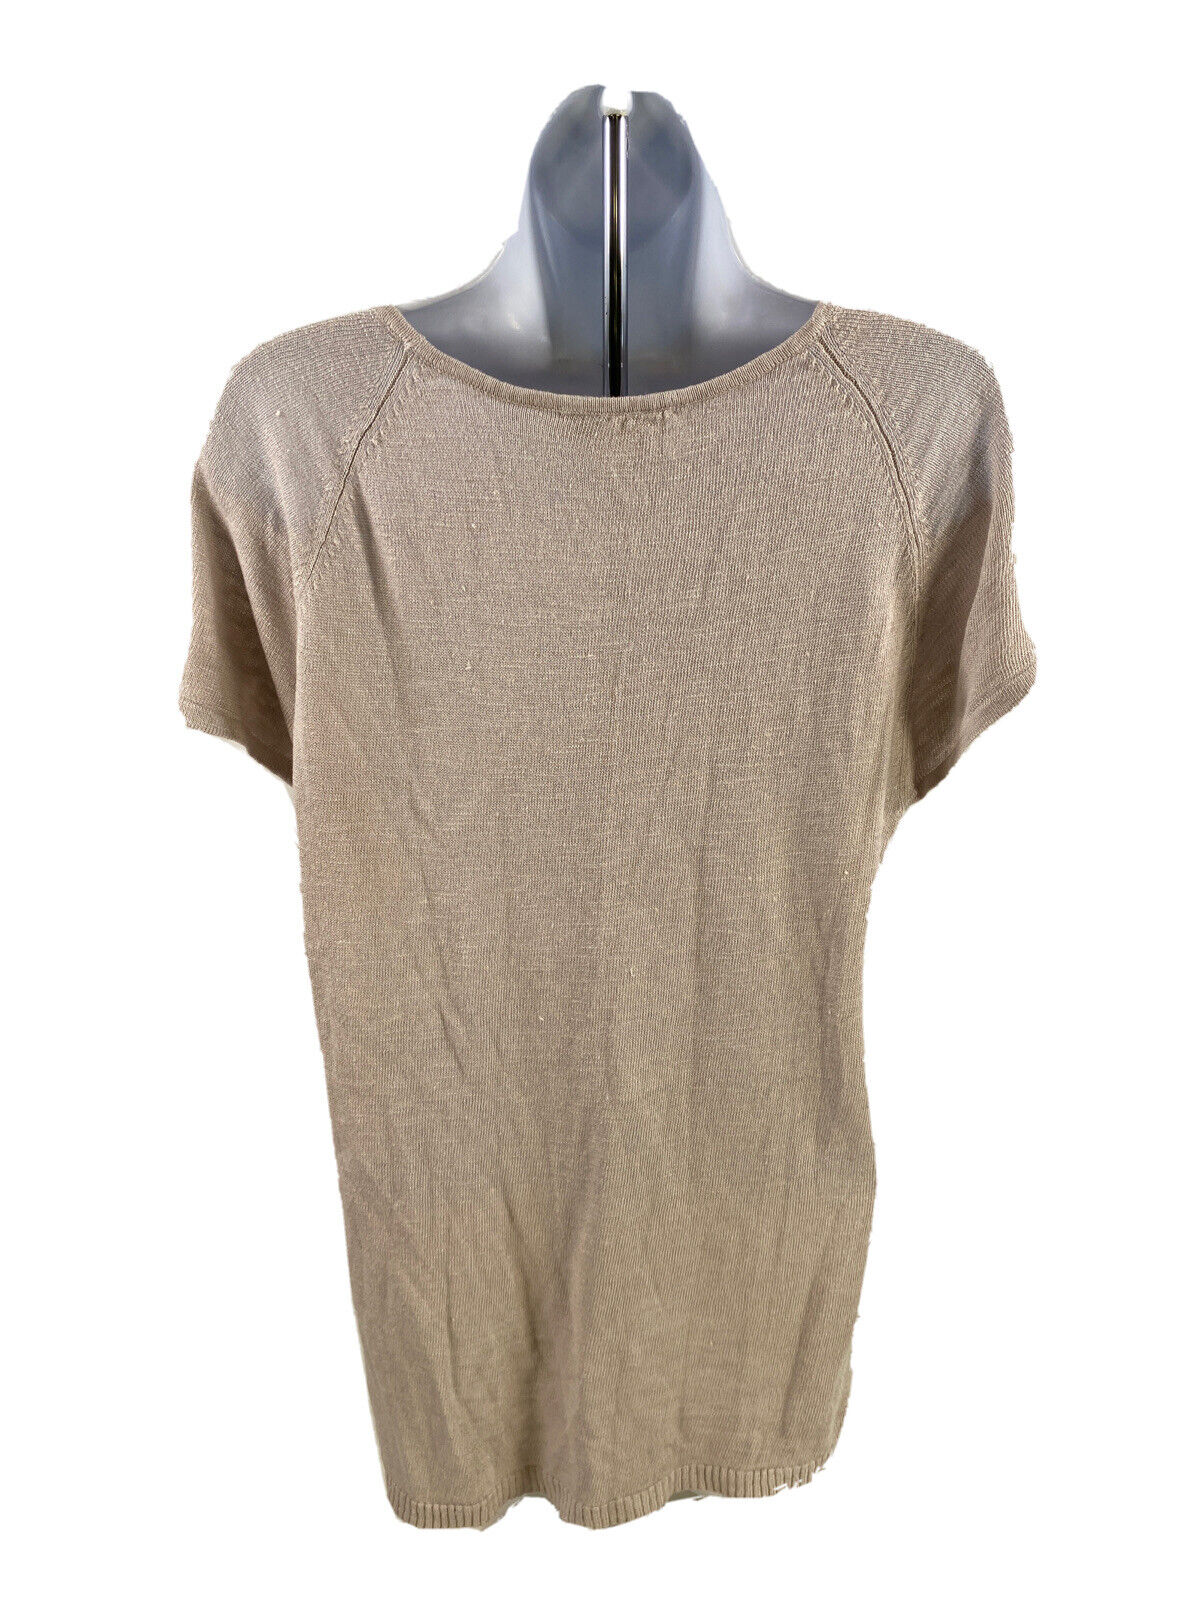 NEW Coldwater Creek Women's Gray Sheer Overlay Short Sleeve Sweater - M